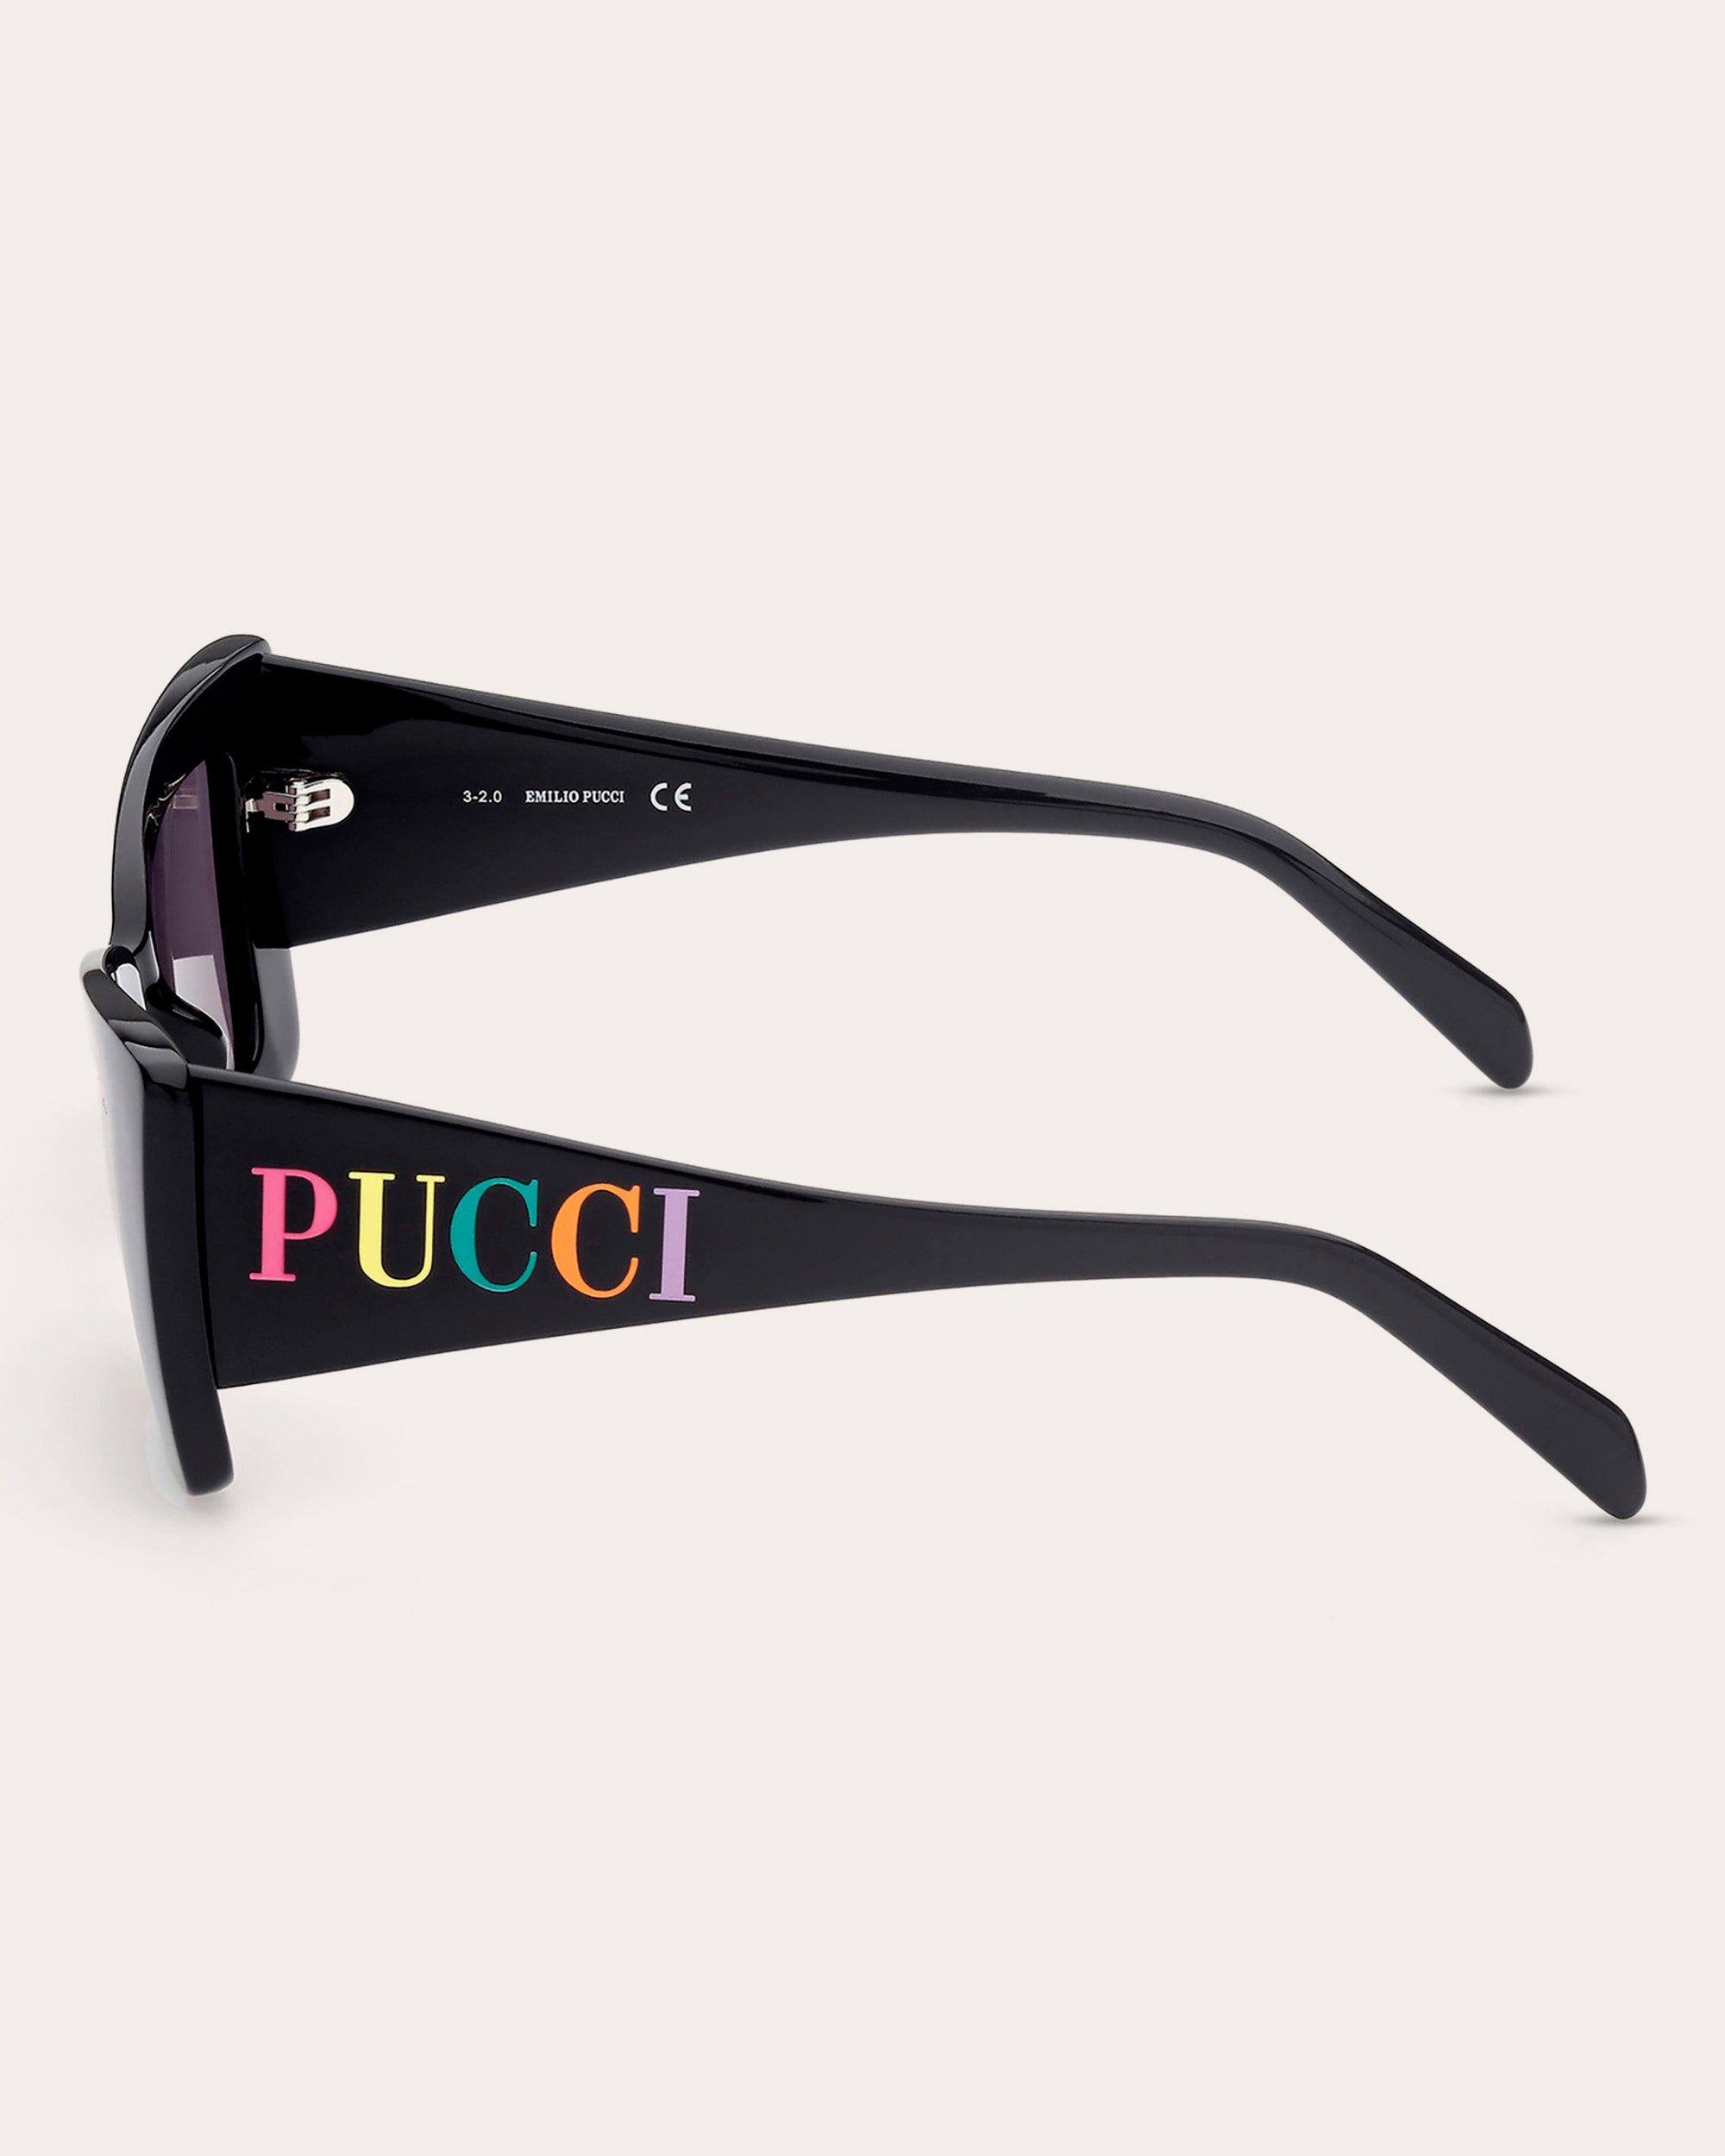 Emilio Pucci EP0192 Gradient Butterfly Sunglasses